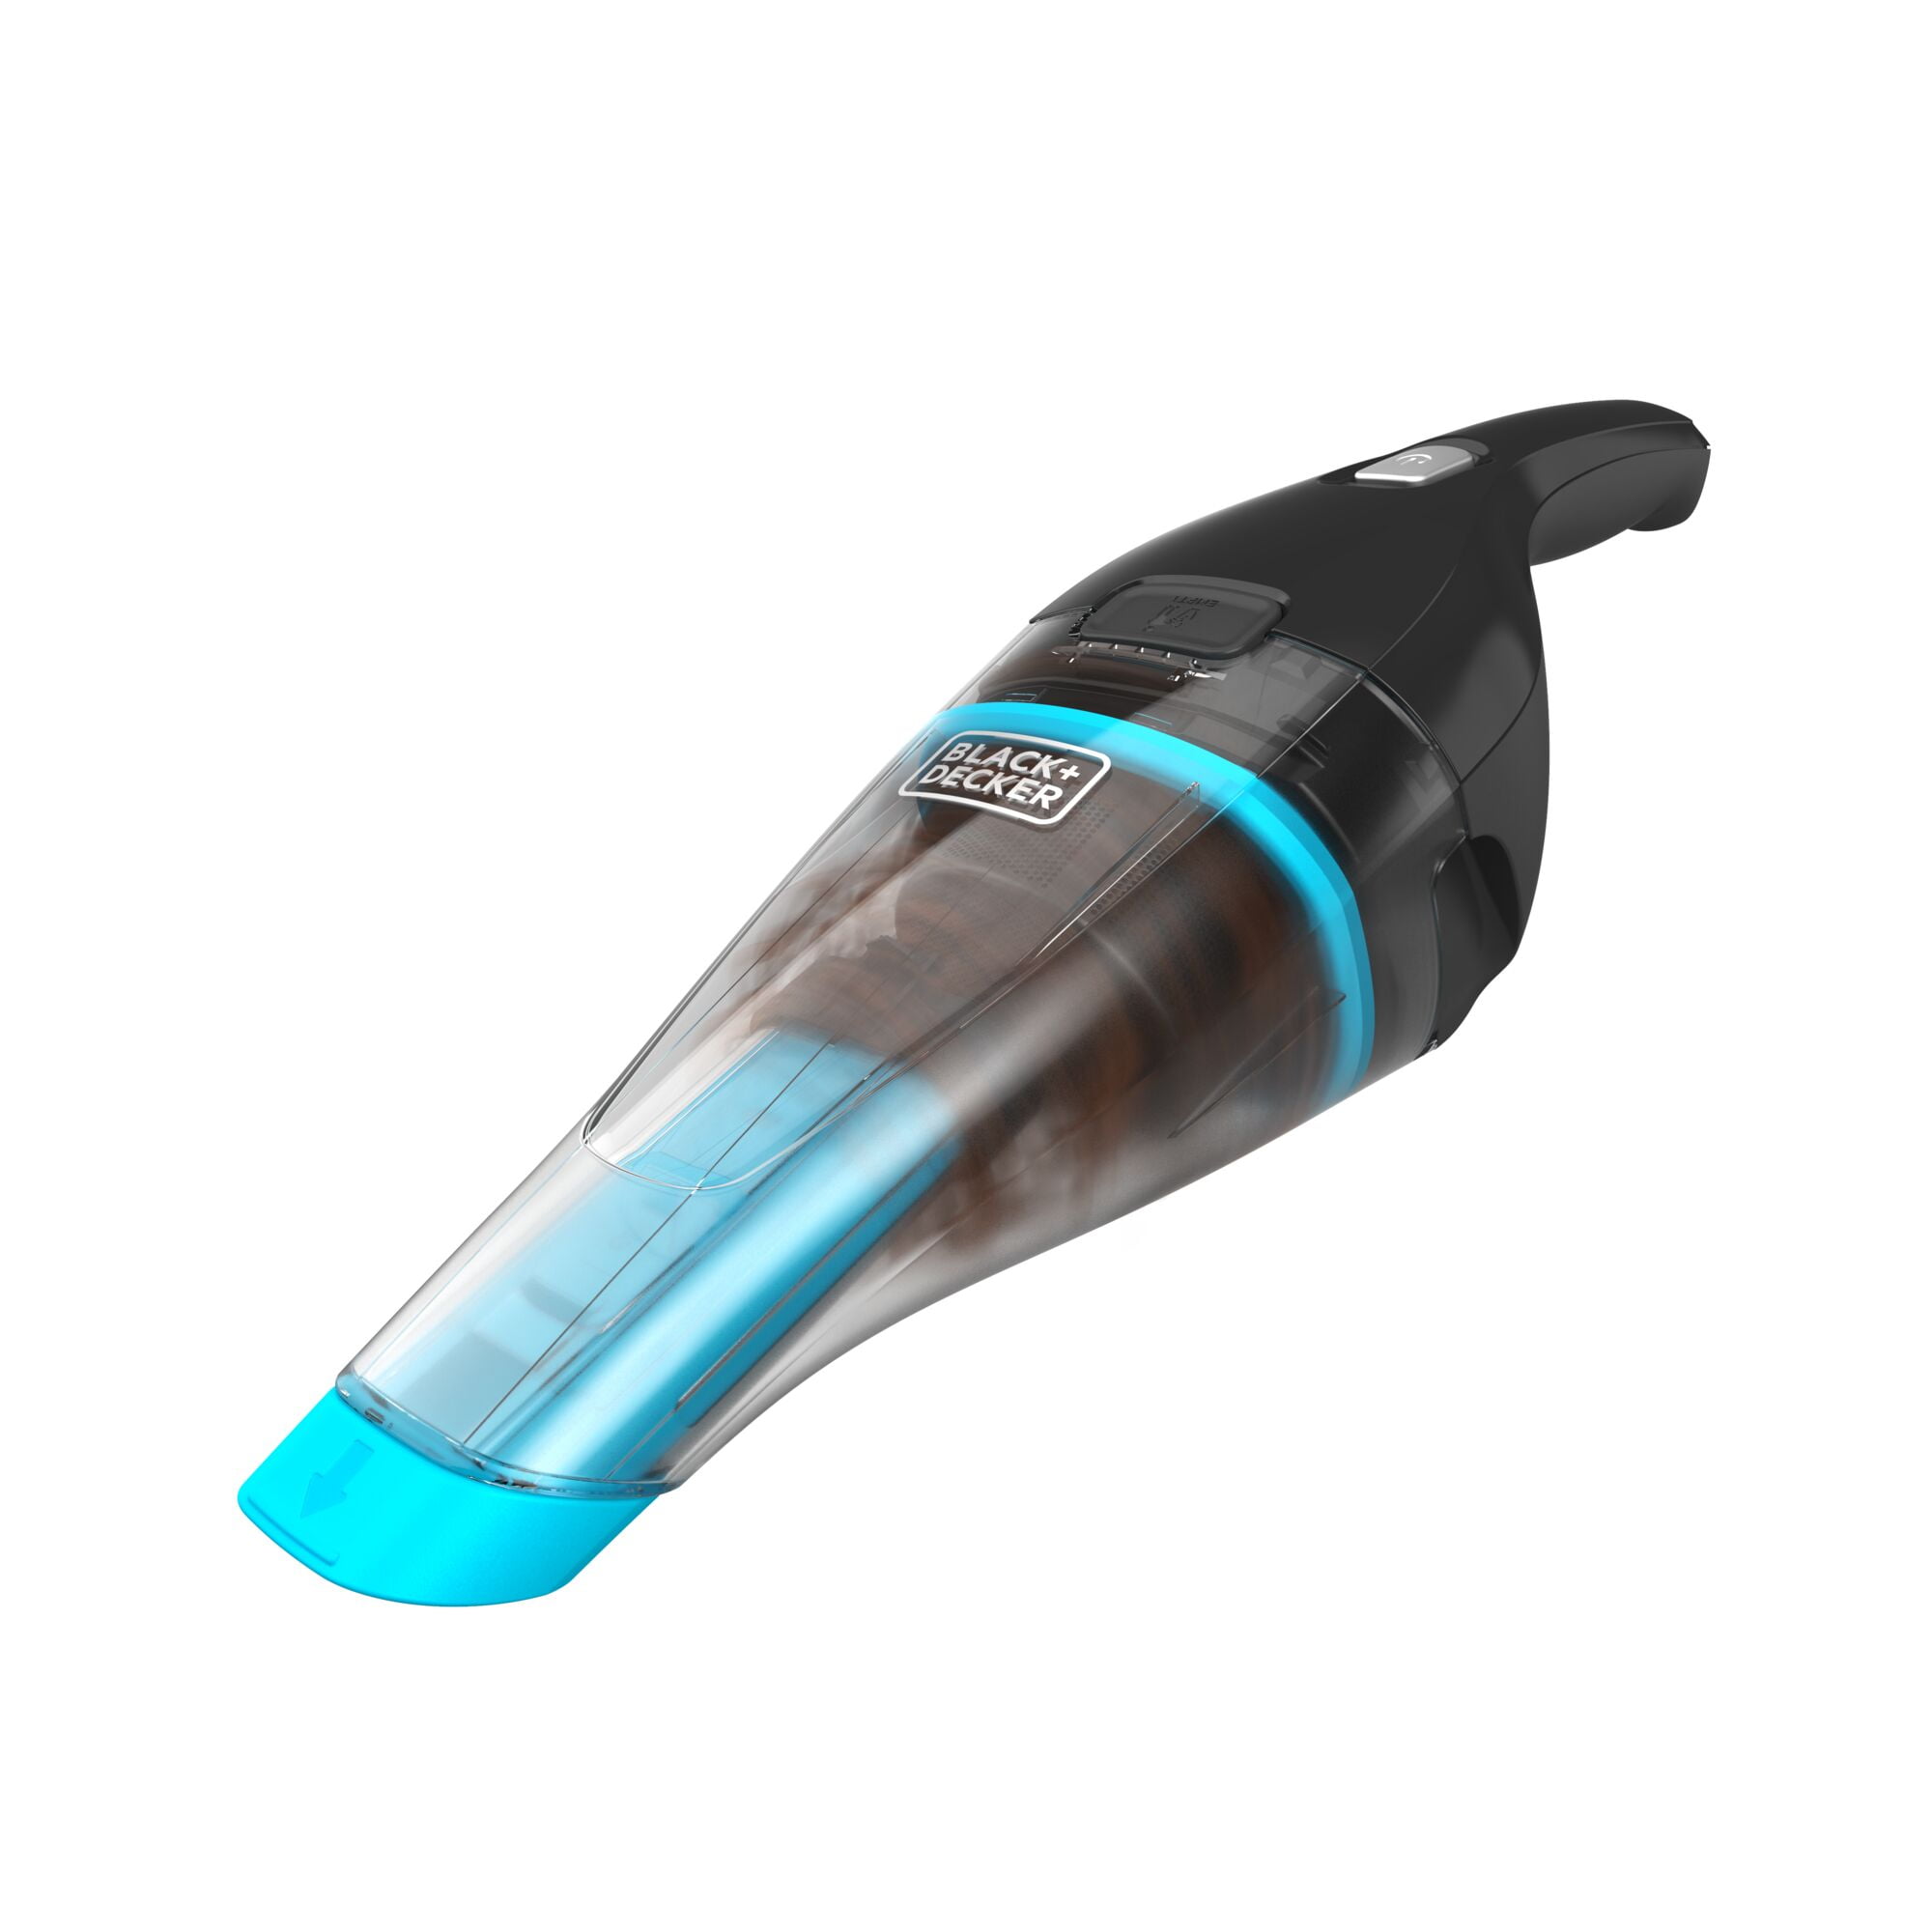 BLACK & DECKER 9.6-Volt Cordless Car Wet/Dry Handheld Vacuum at